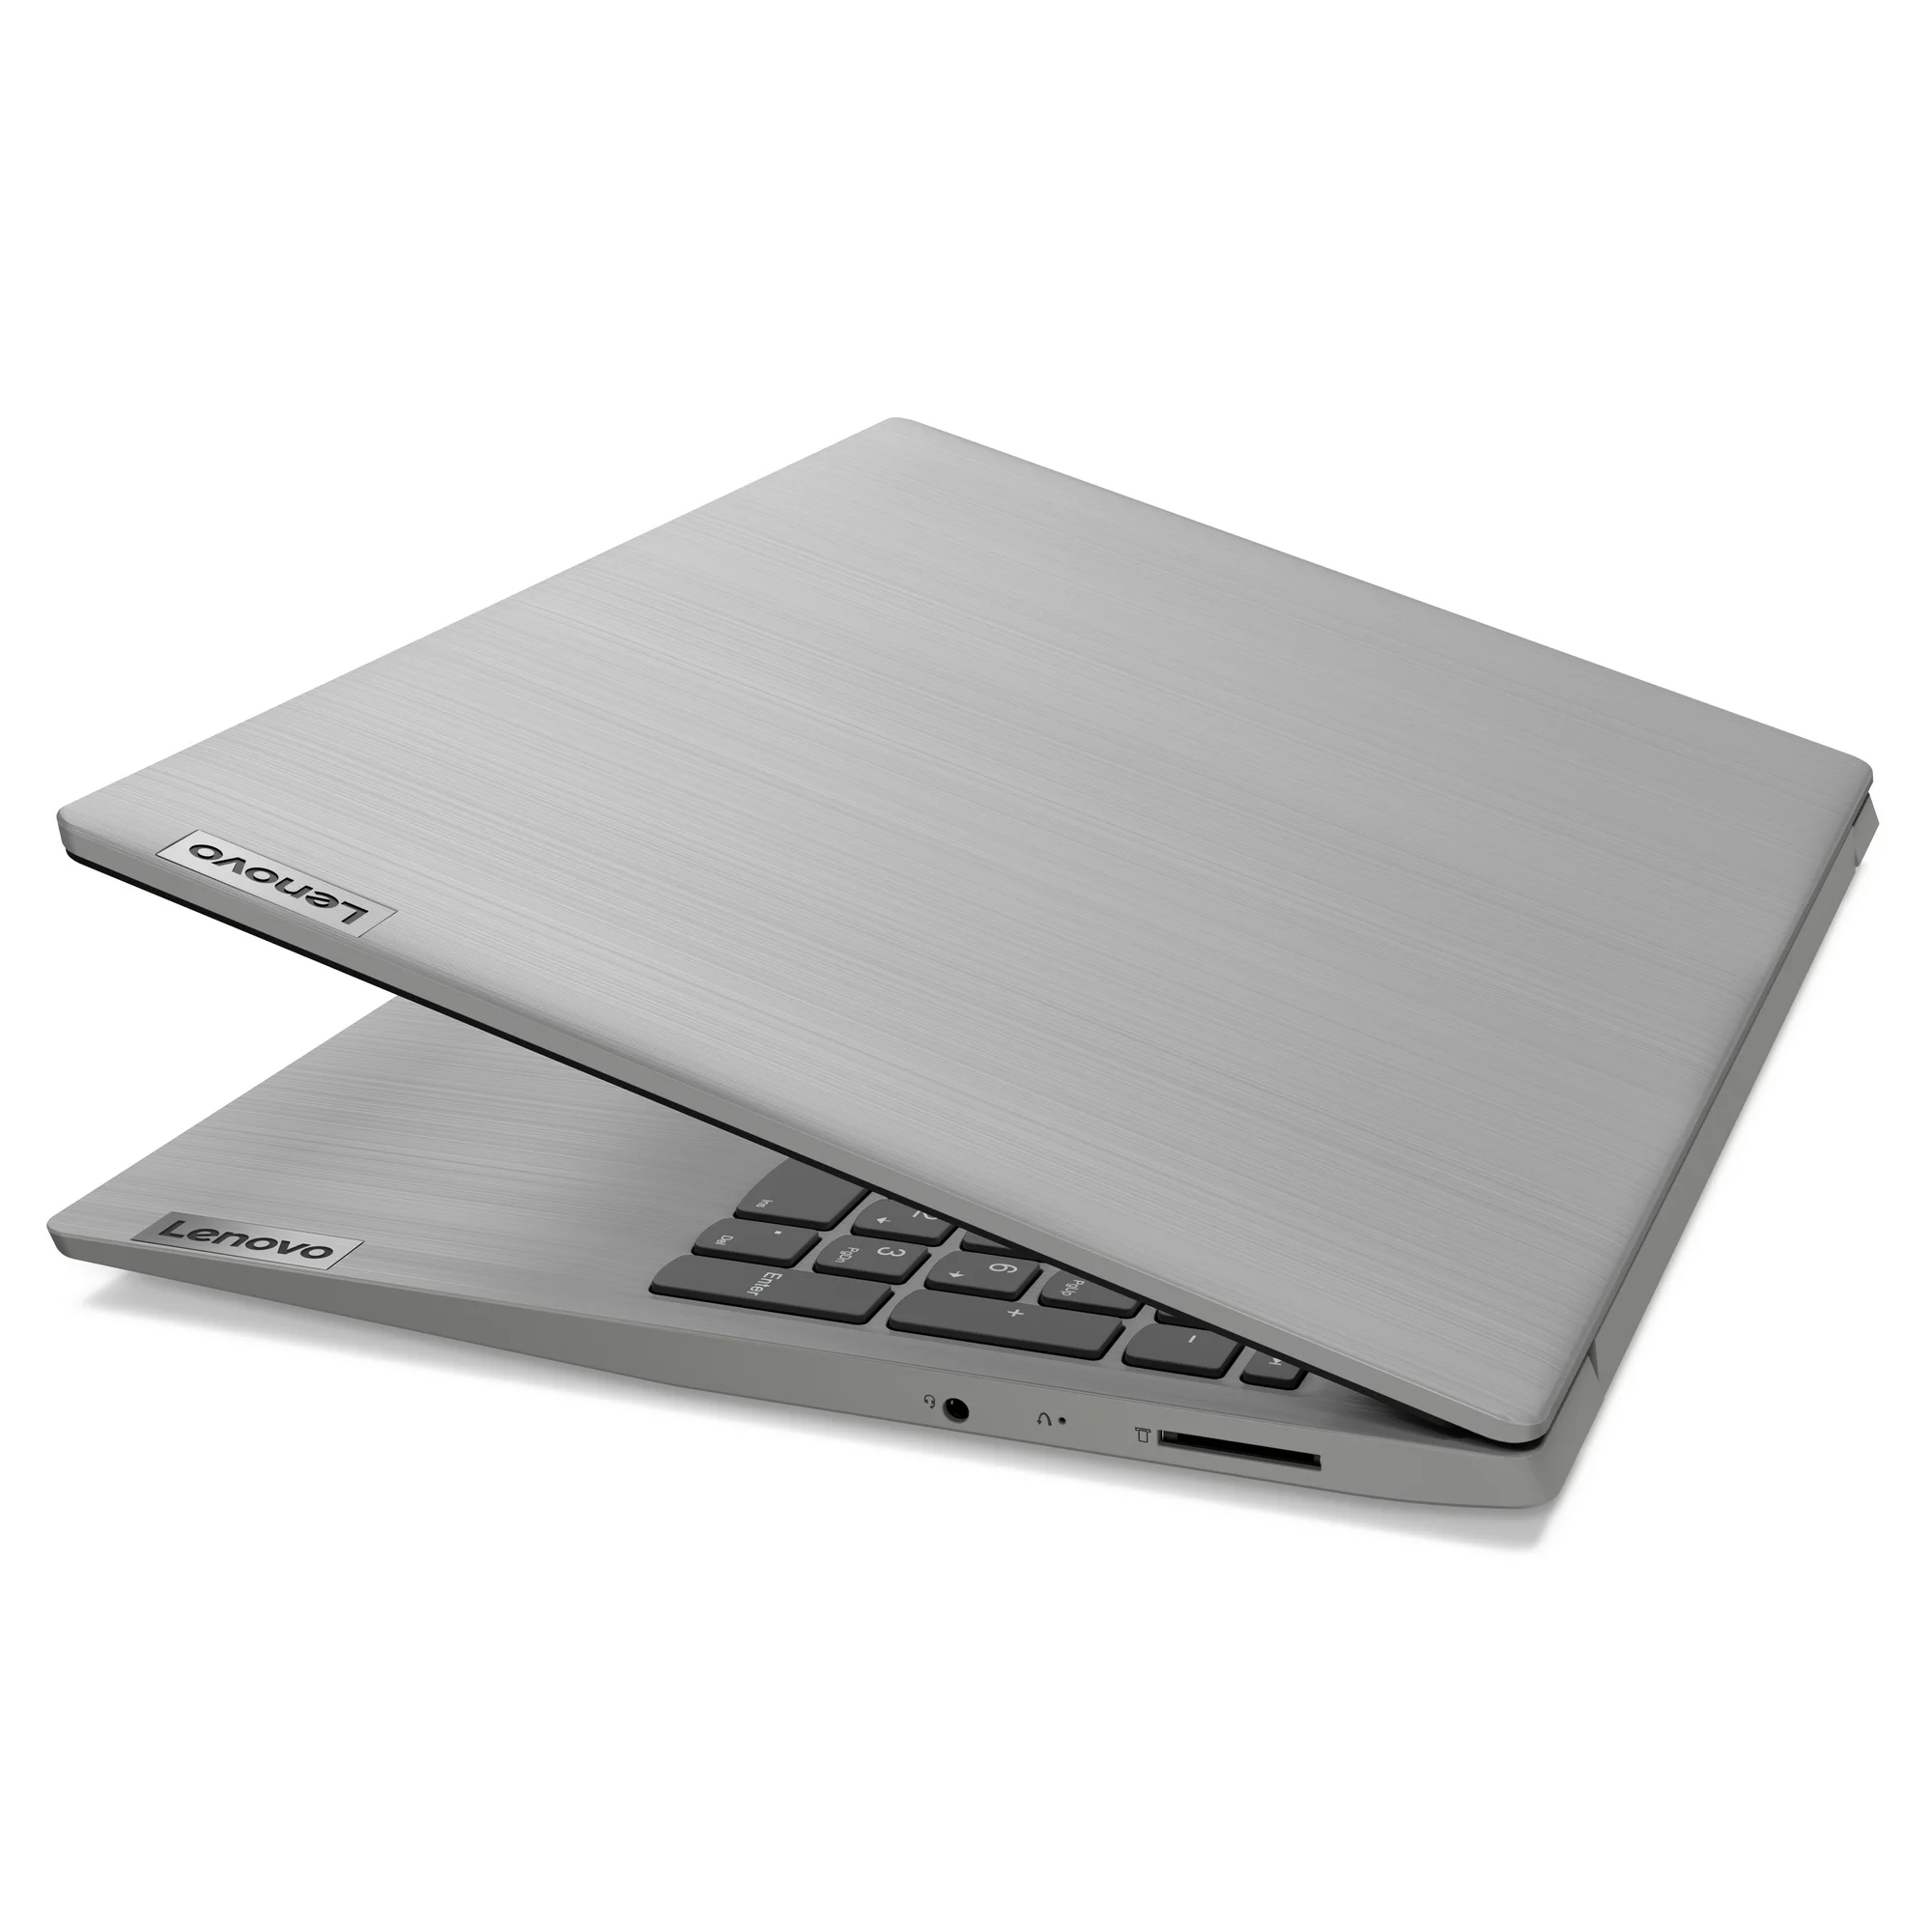 Lenovo Ideapad 3i 14" FHD Laptop - Intel i3, 4GB, 128GB SSD, Windows 11 (S Mode) - Platinum Grey